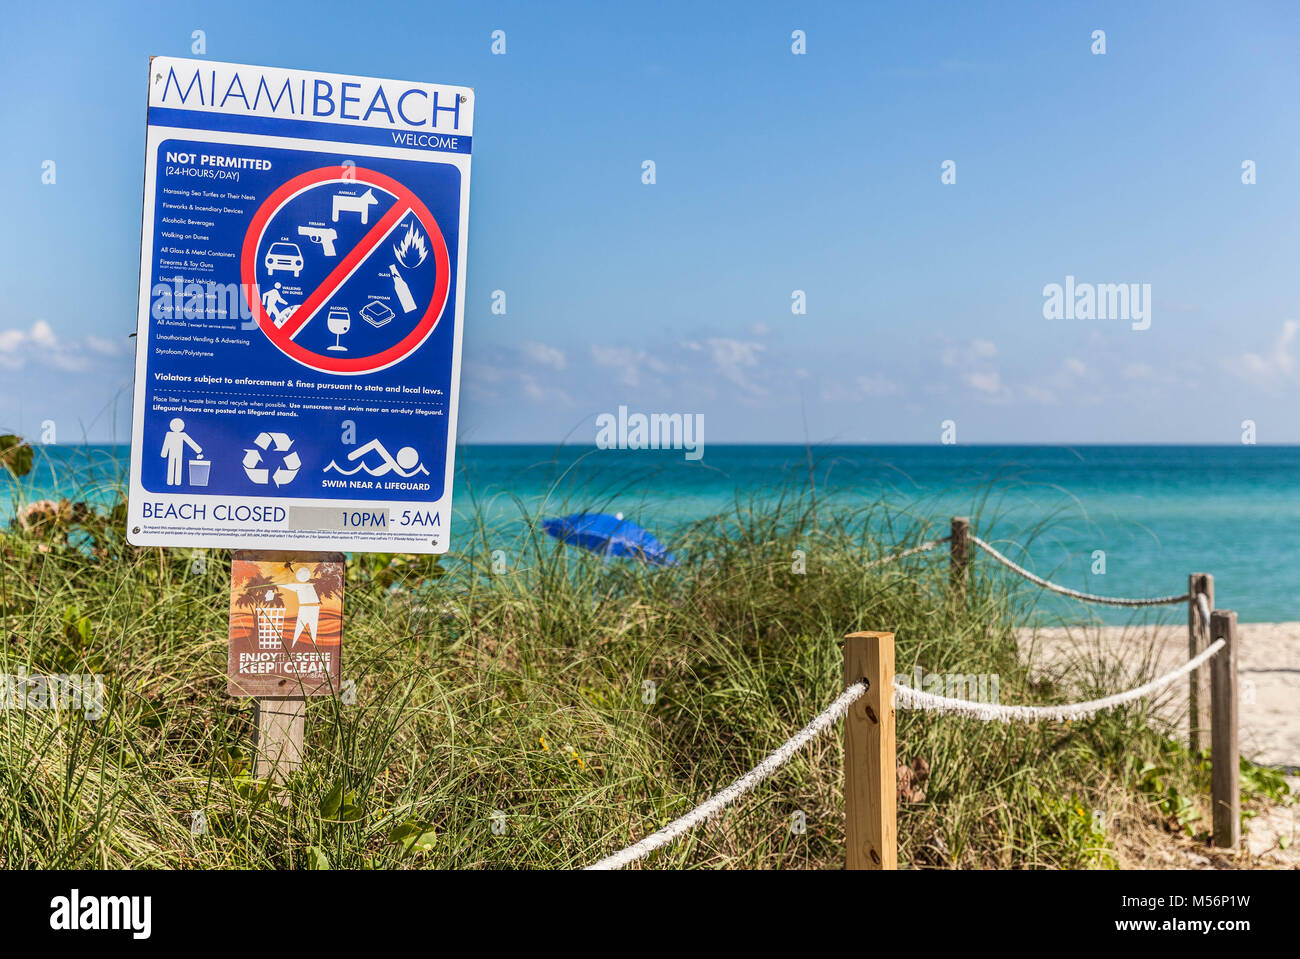 Not permitted sign, Miami Beach, Florida, USA. Stock Photo